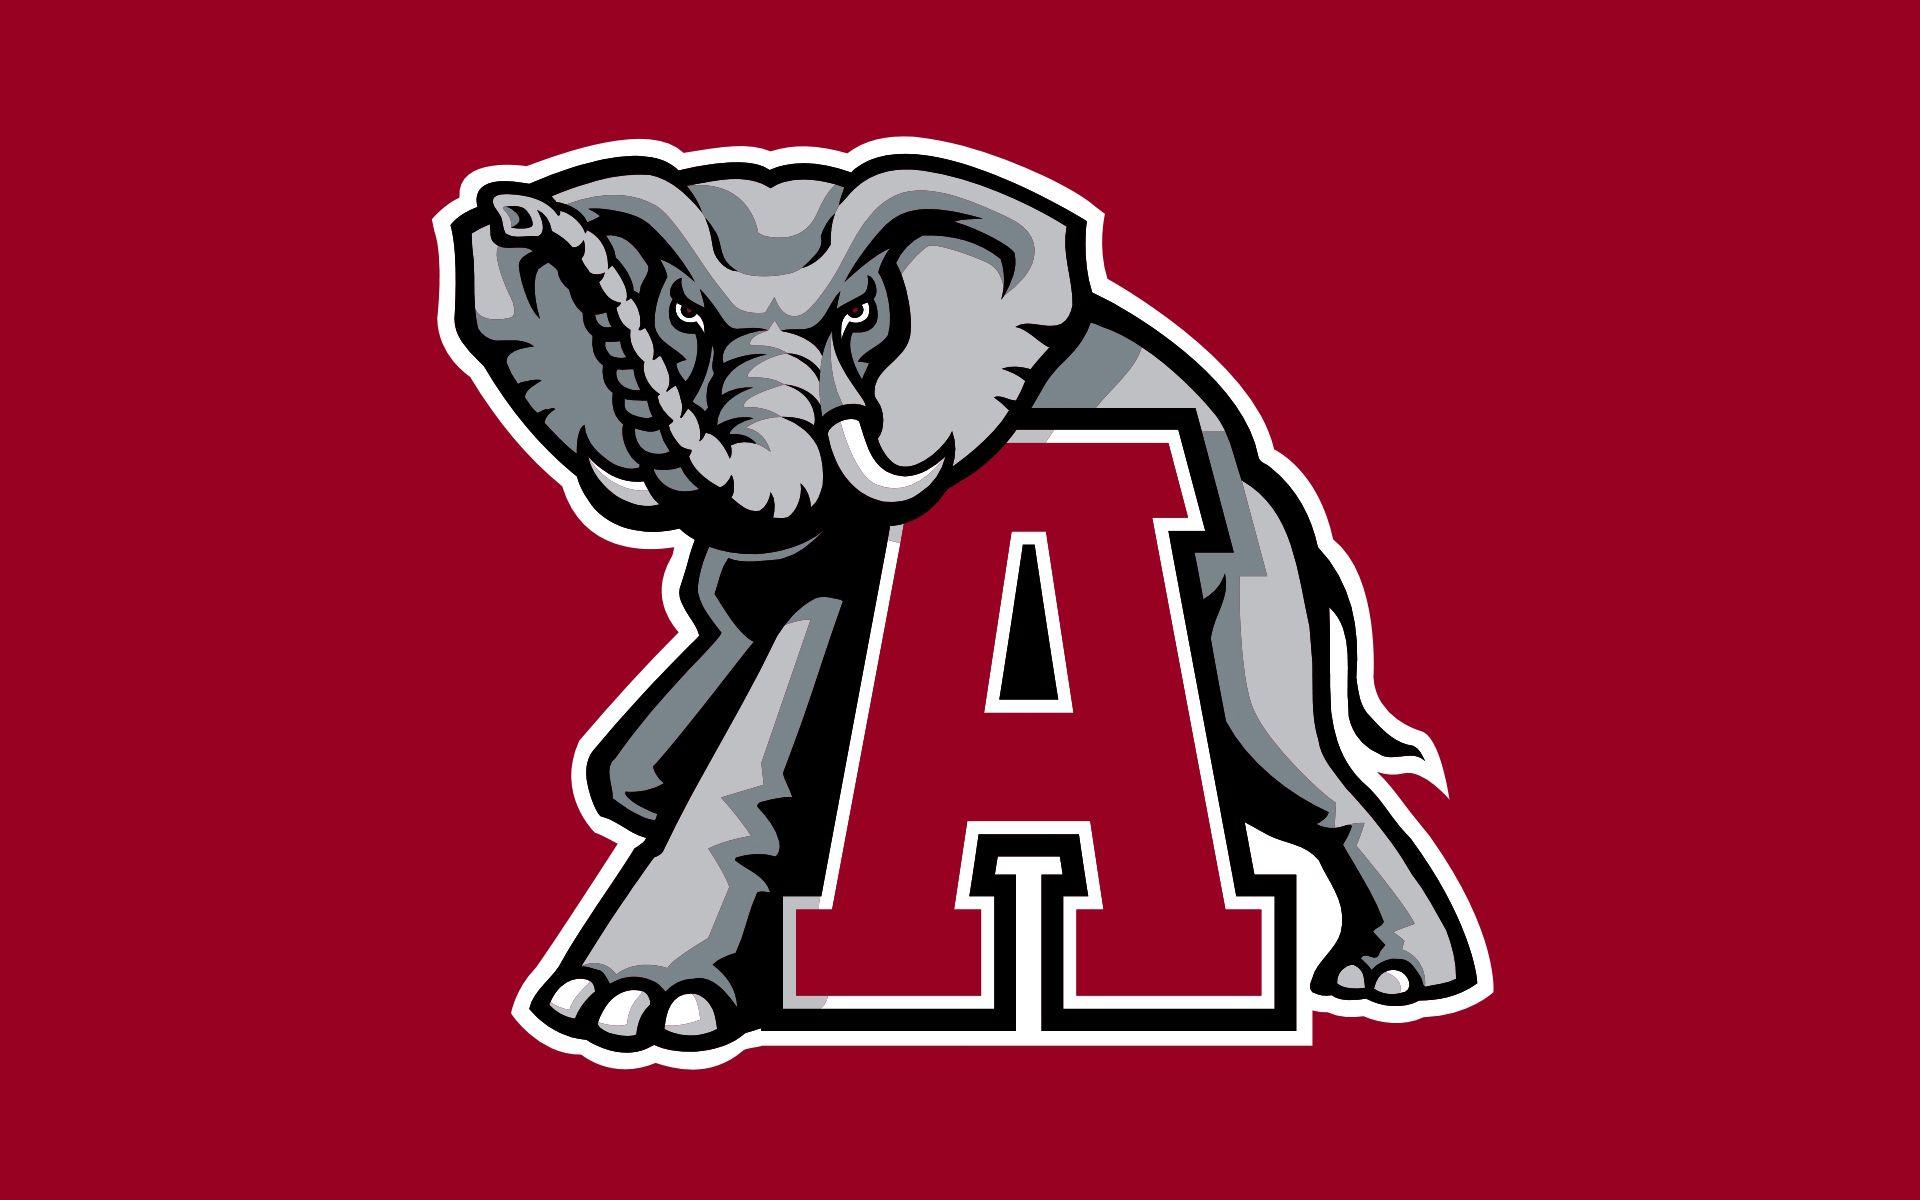 Awesome Elephant Alabama Football Logo Wallpaper in High Quality